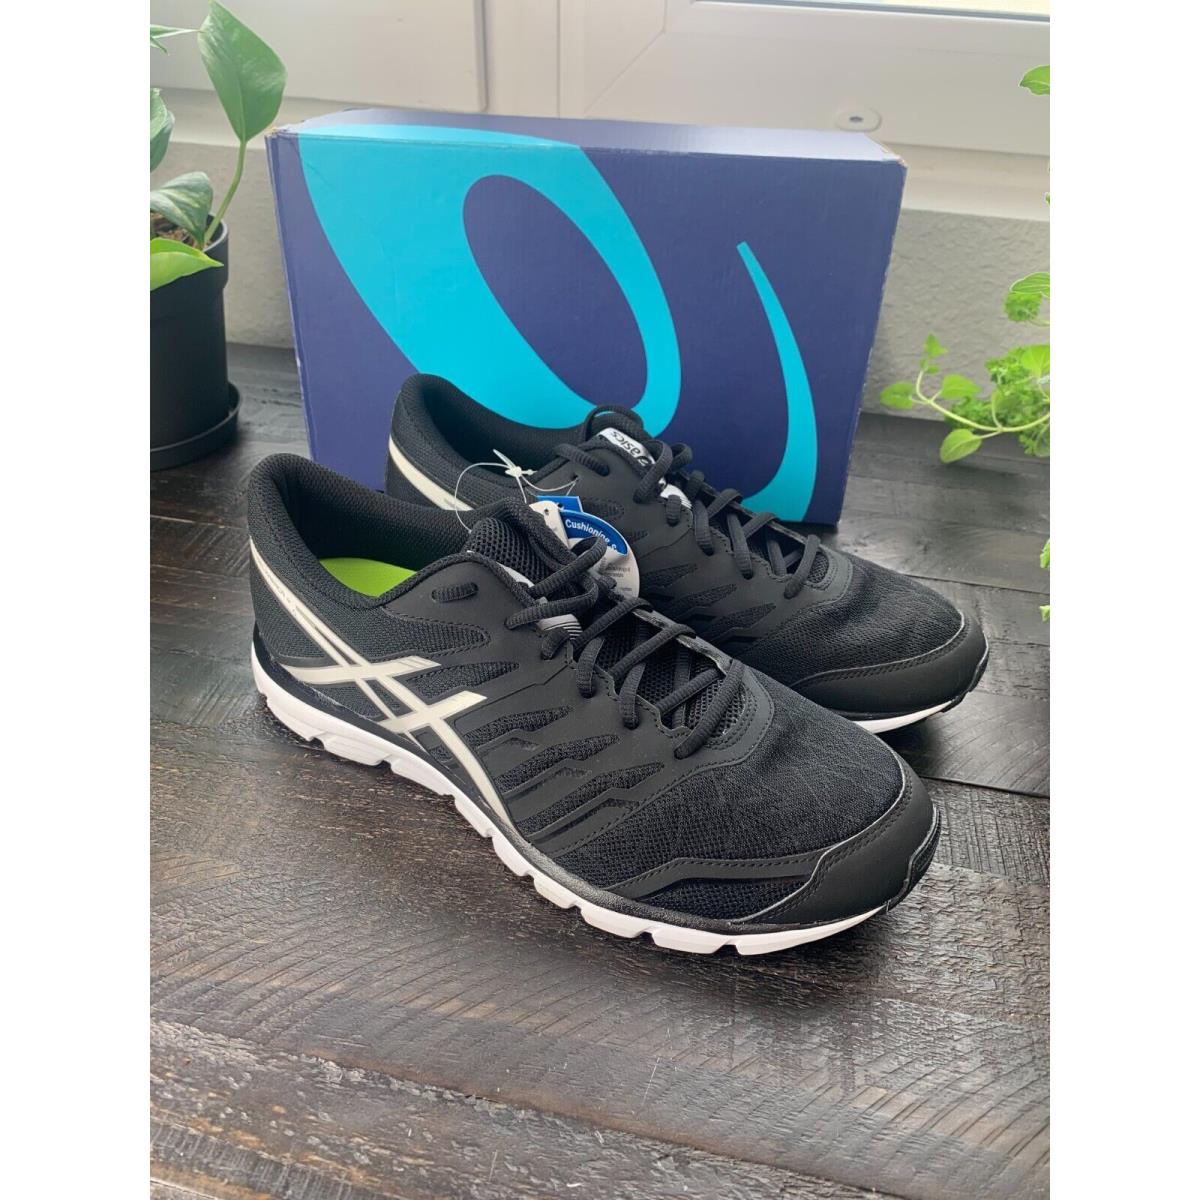 Men`s Asics Gel-zaraca 4 Black White Silver Athletic Running Shoes Size 10.5